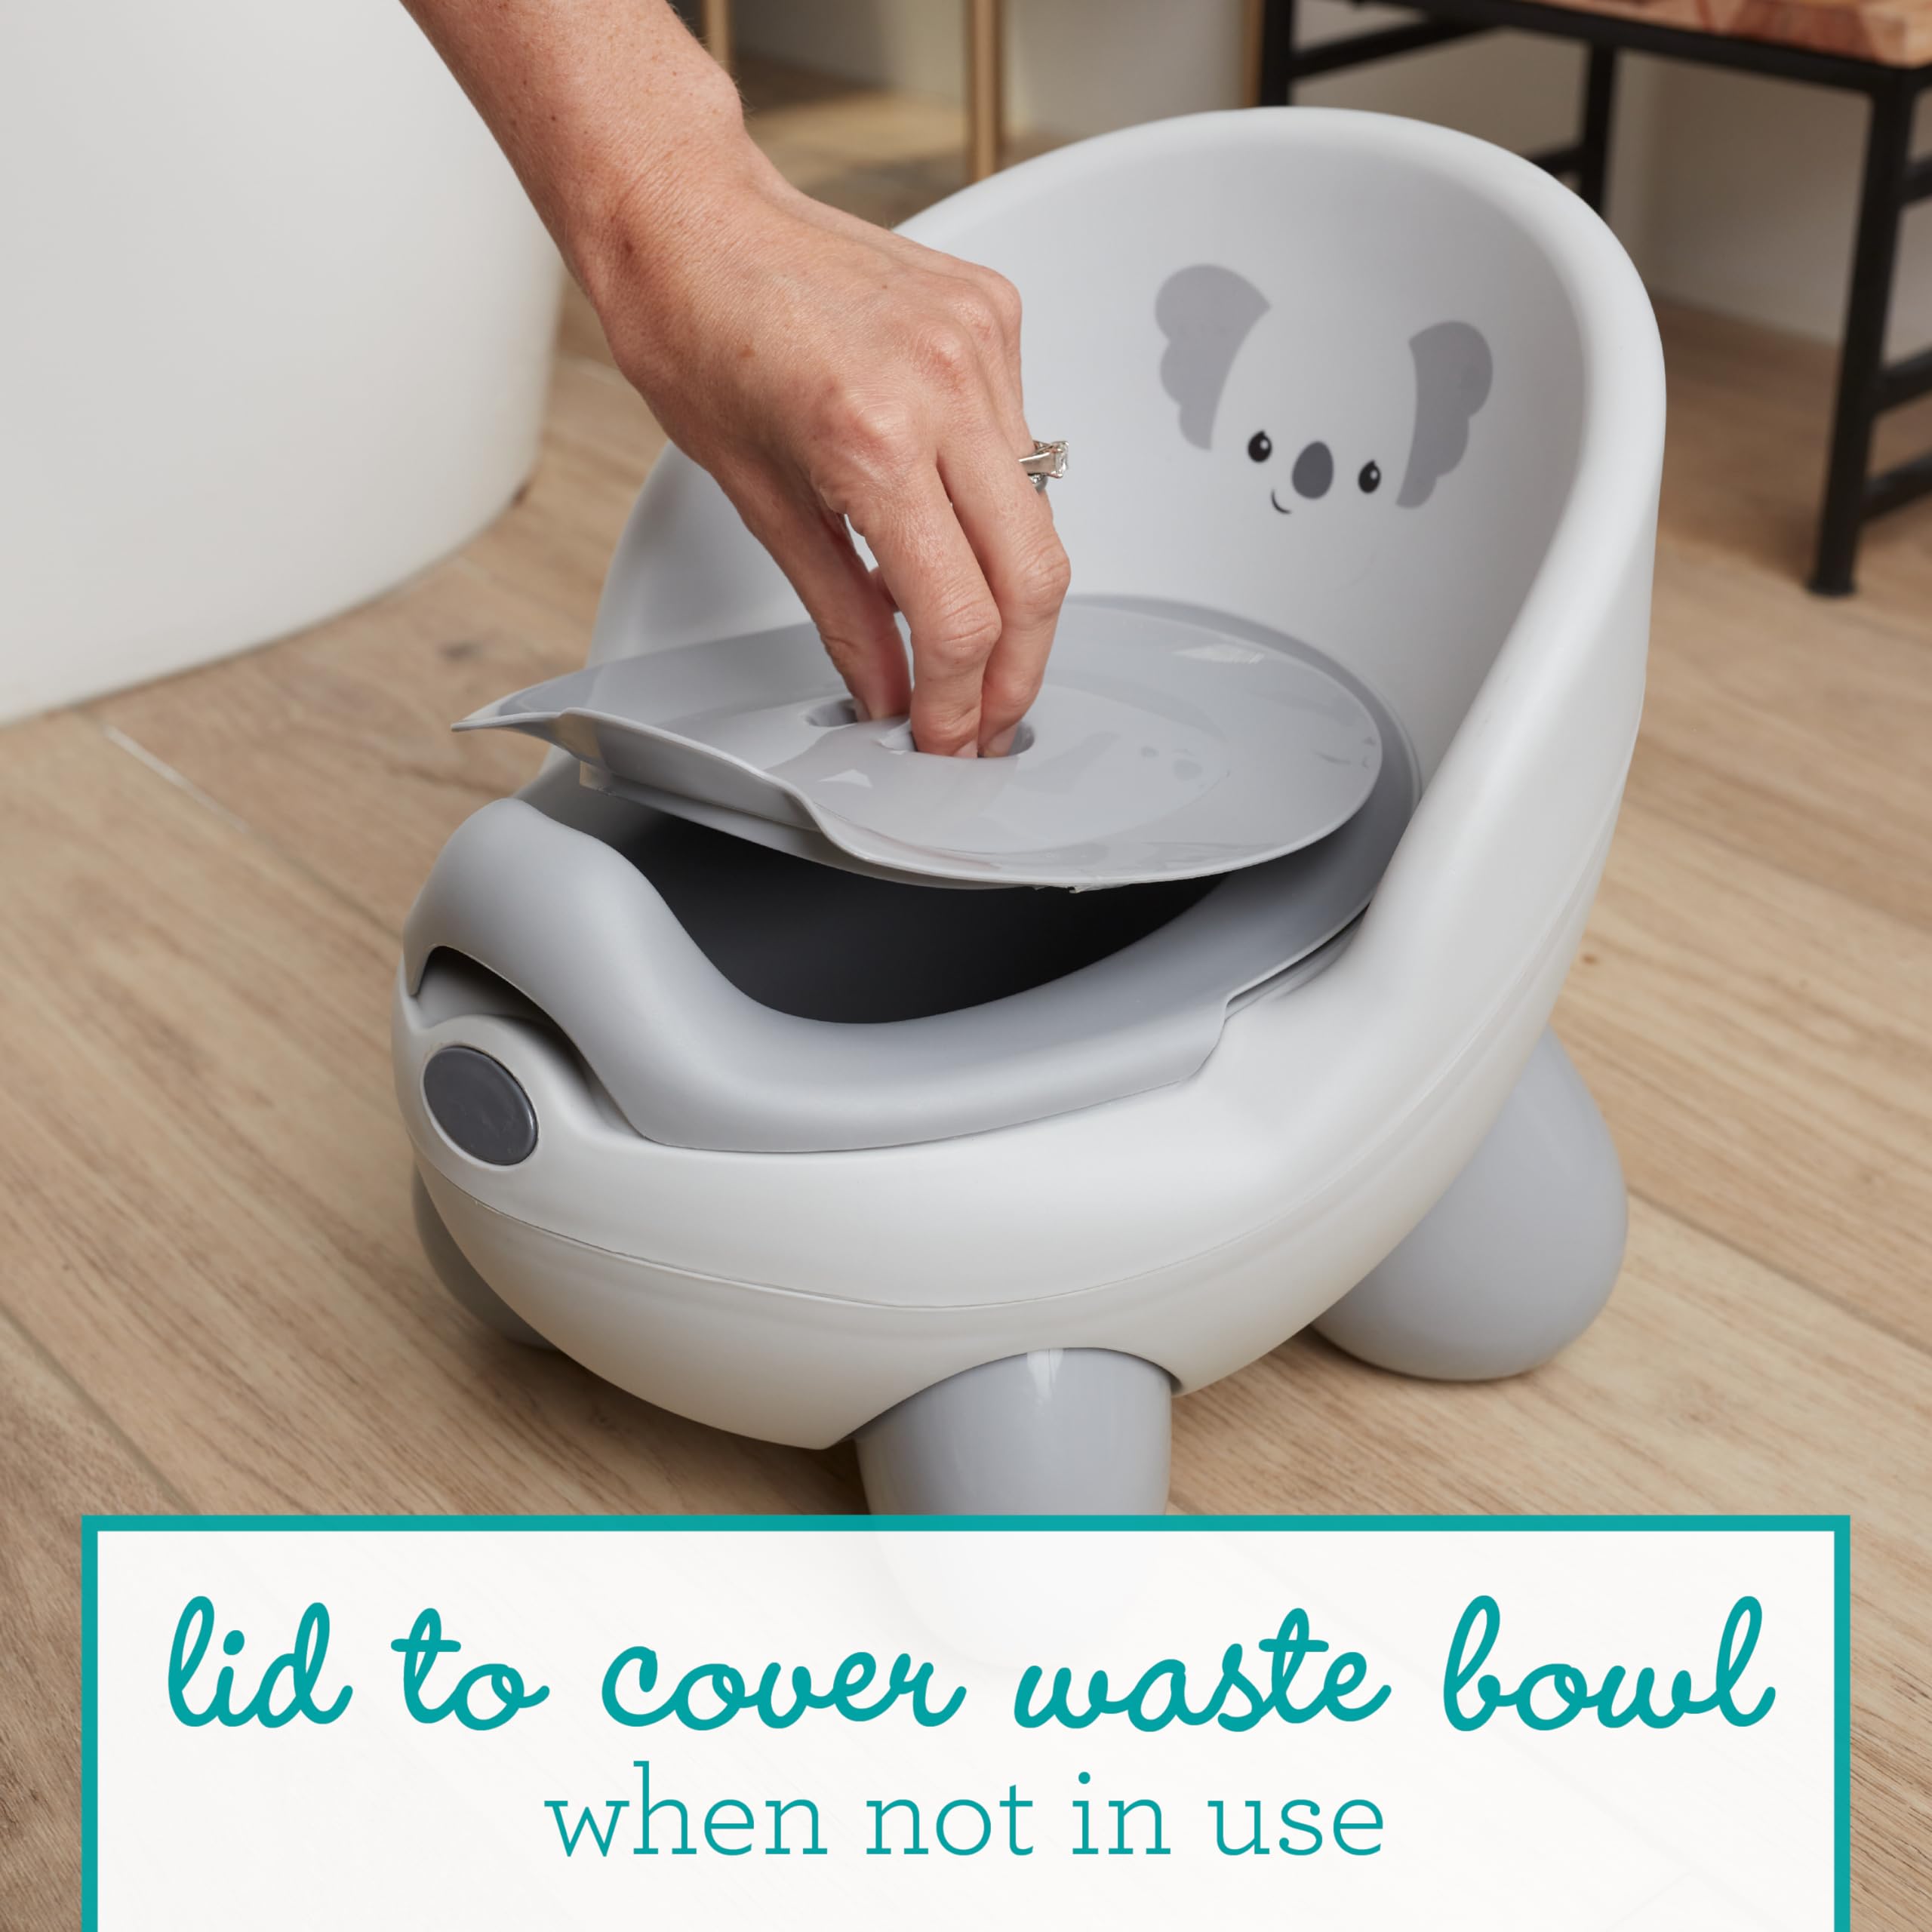 Infantino Potty Pals Potty Seat - Potty Training Toilet, Removable Bowl with Splashguard, Slip Resistant Feet, Gray Koala